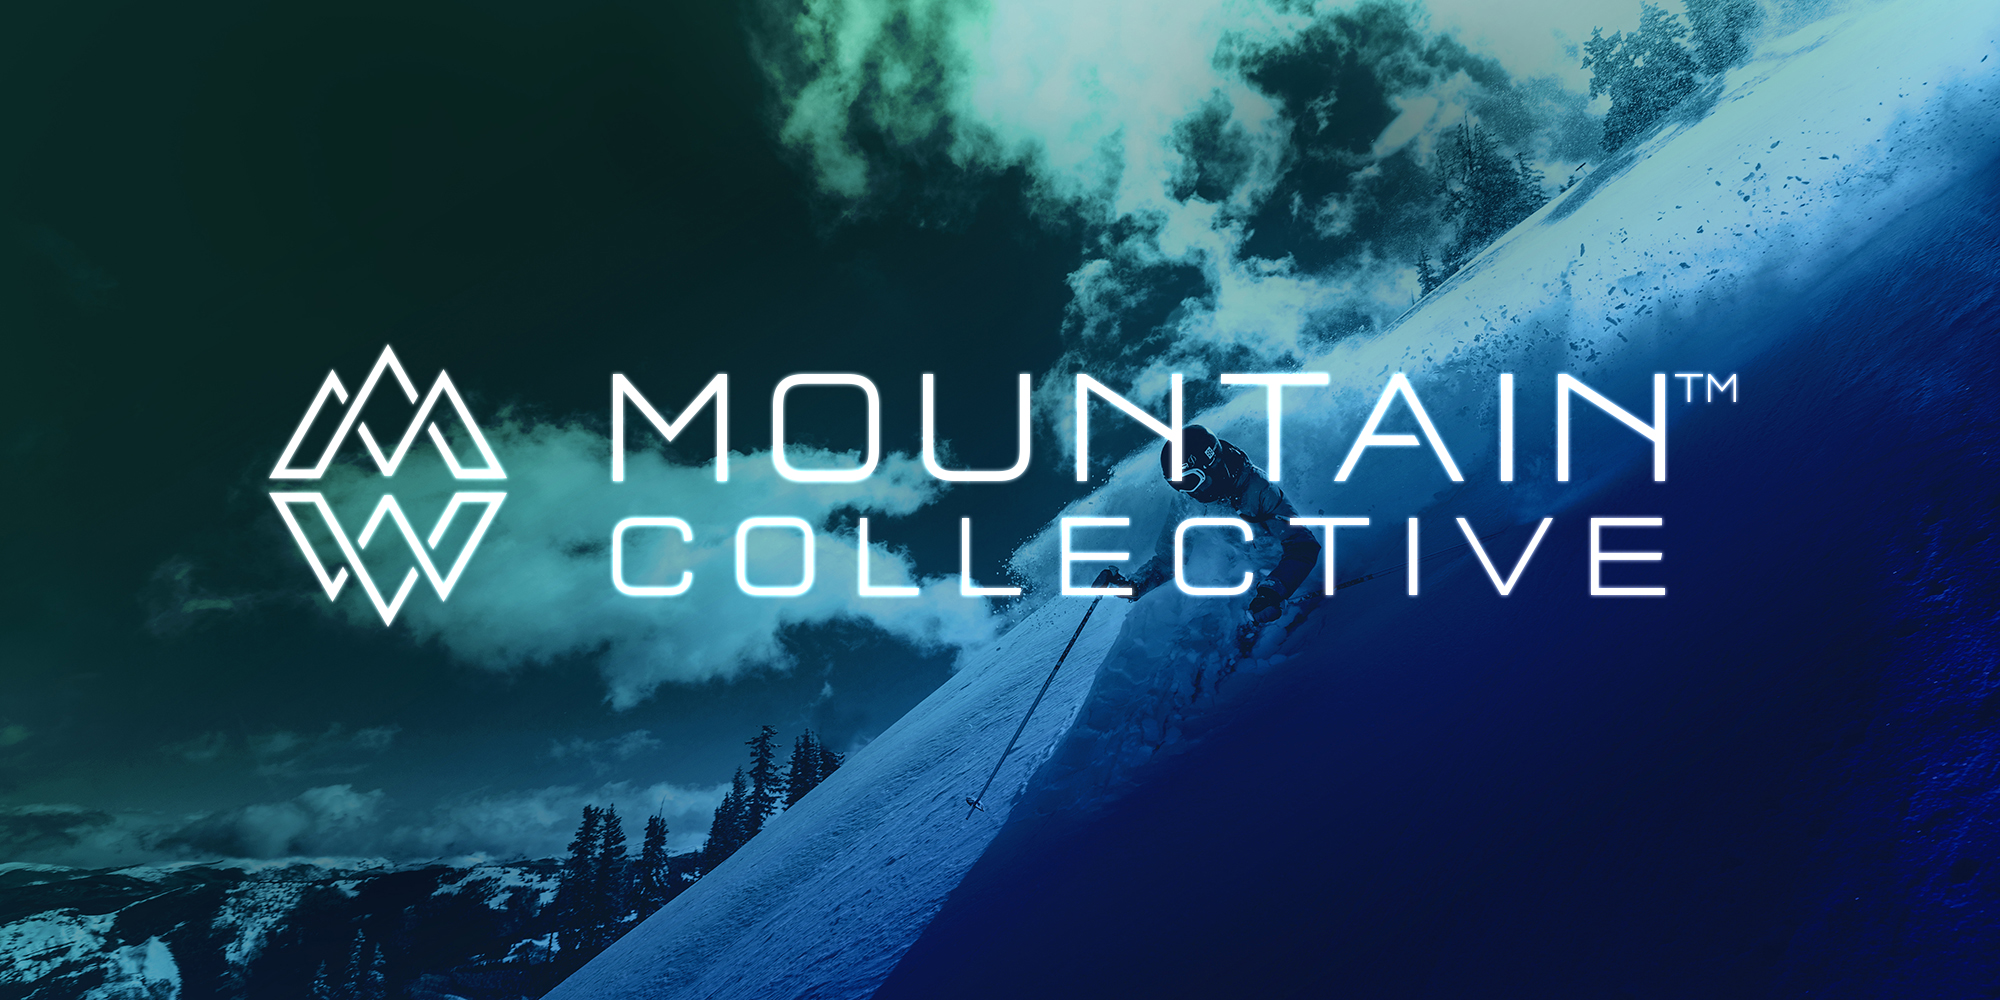 Mountain Collective Pass - Niseko United.16 destinations- 2 days per resort. 